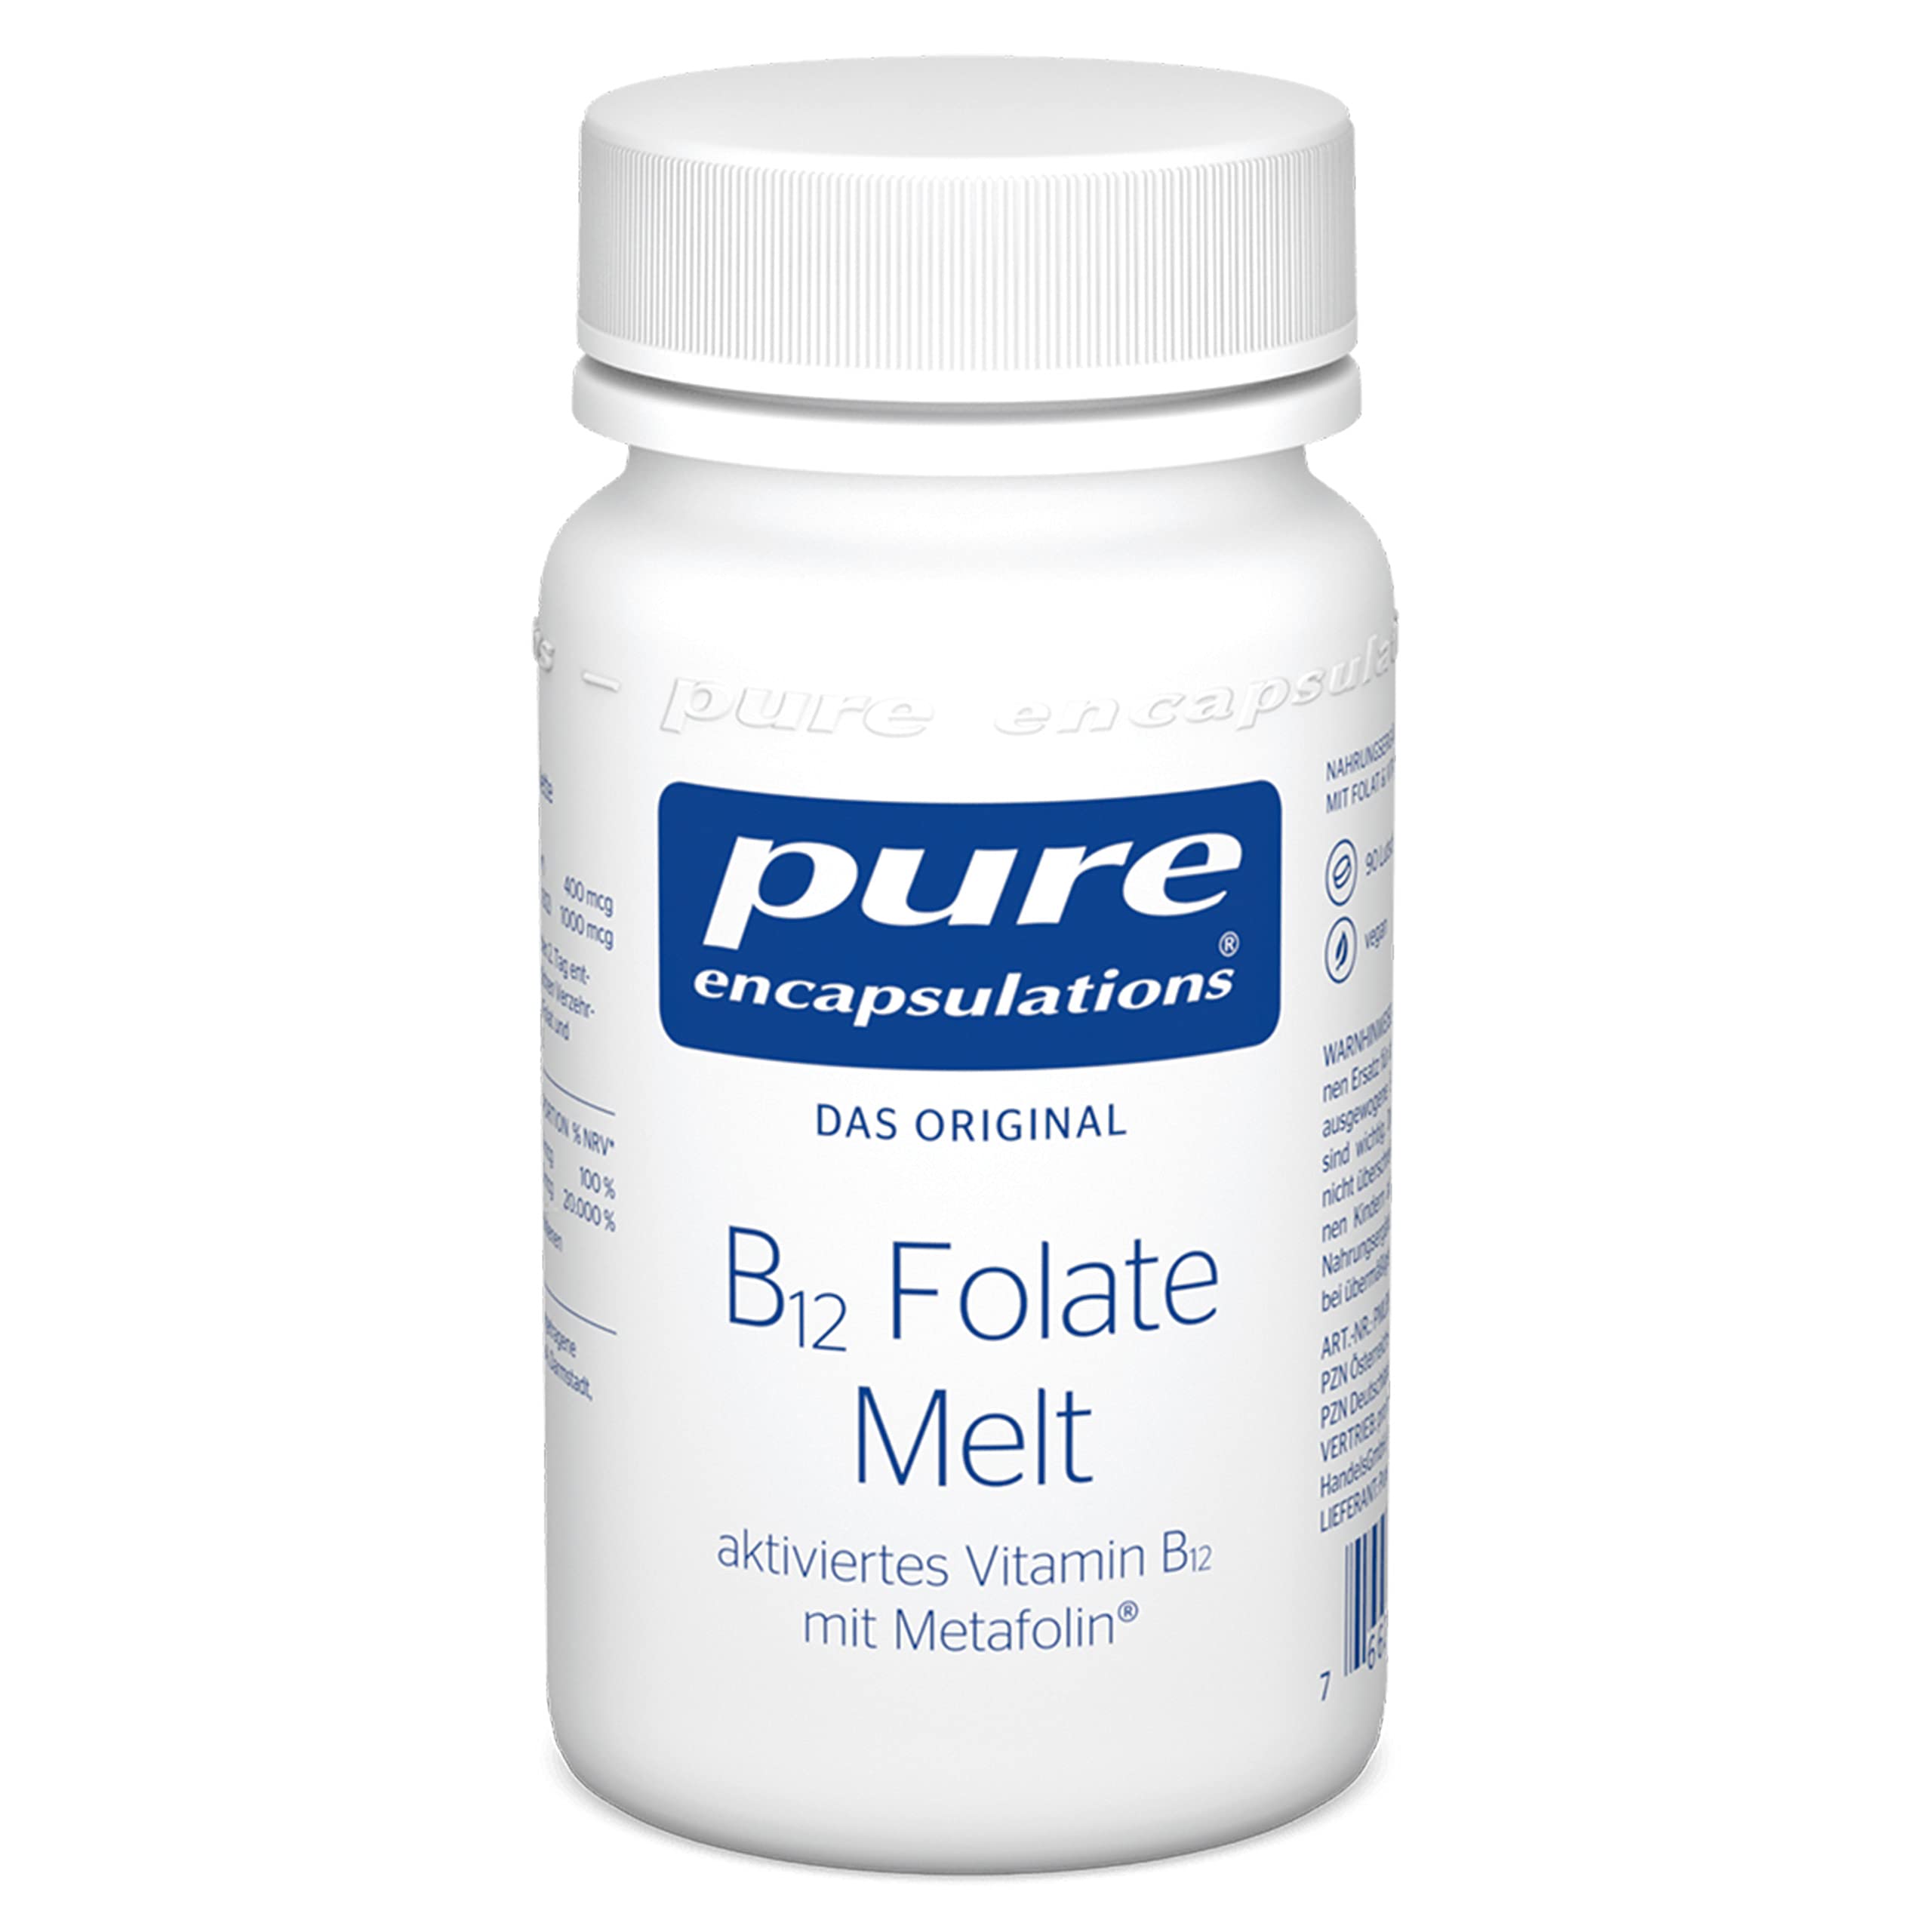 Pure Encapsulations - B12 Folate melt - 90 Kapseln